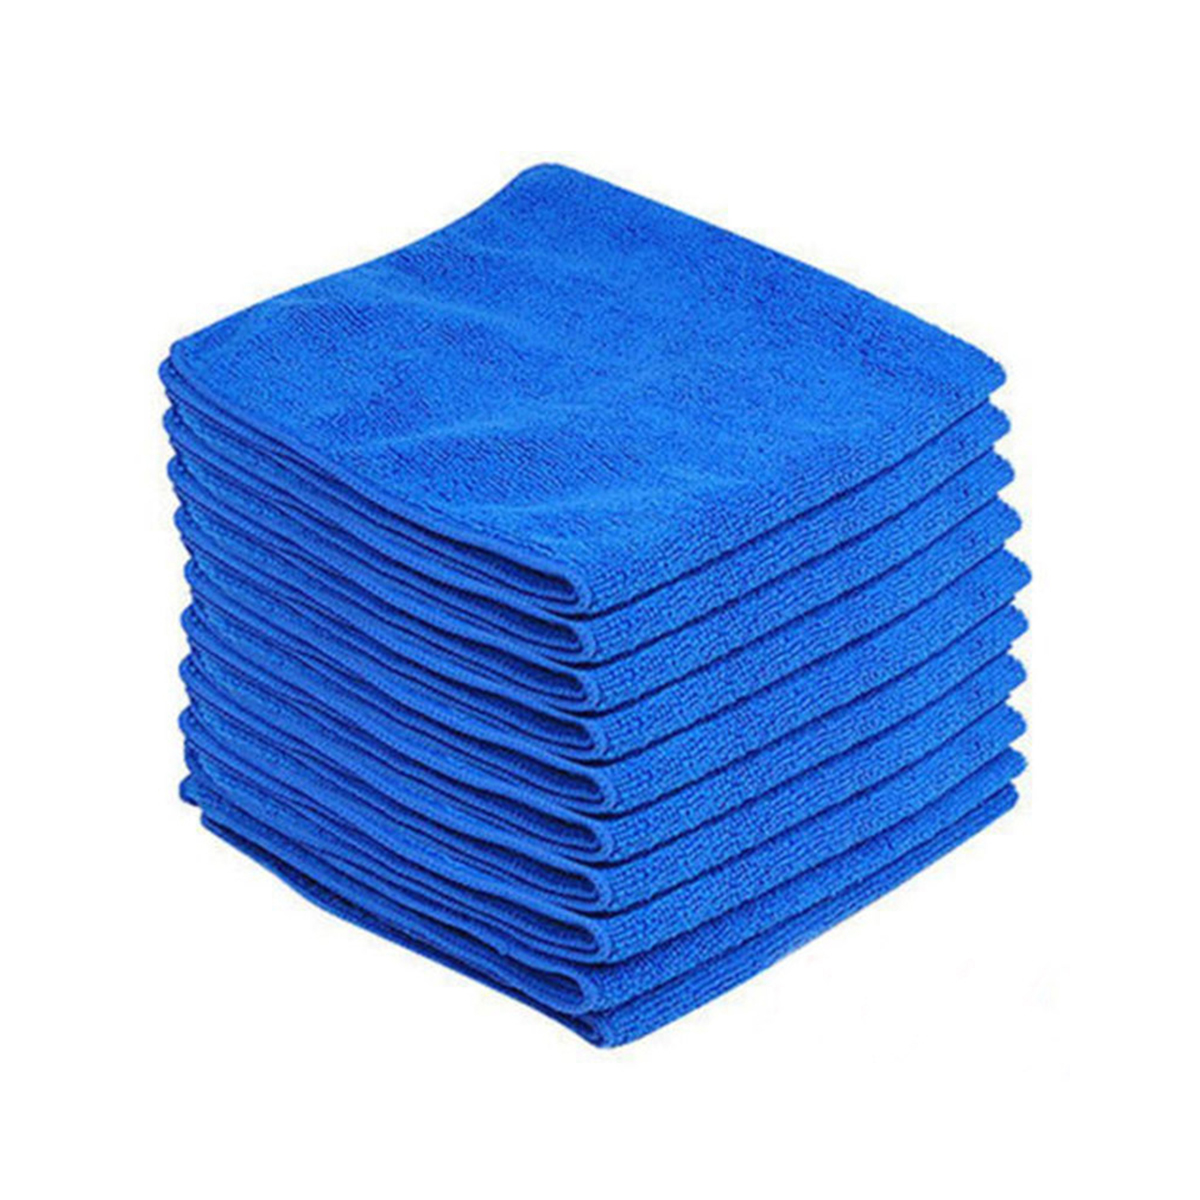 10PCS-Microfiber-Cleaning-Cloths-Washing-Towel-Blue-for-Car-Polishing-Wax-Detailing-Drying-1409803